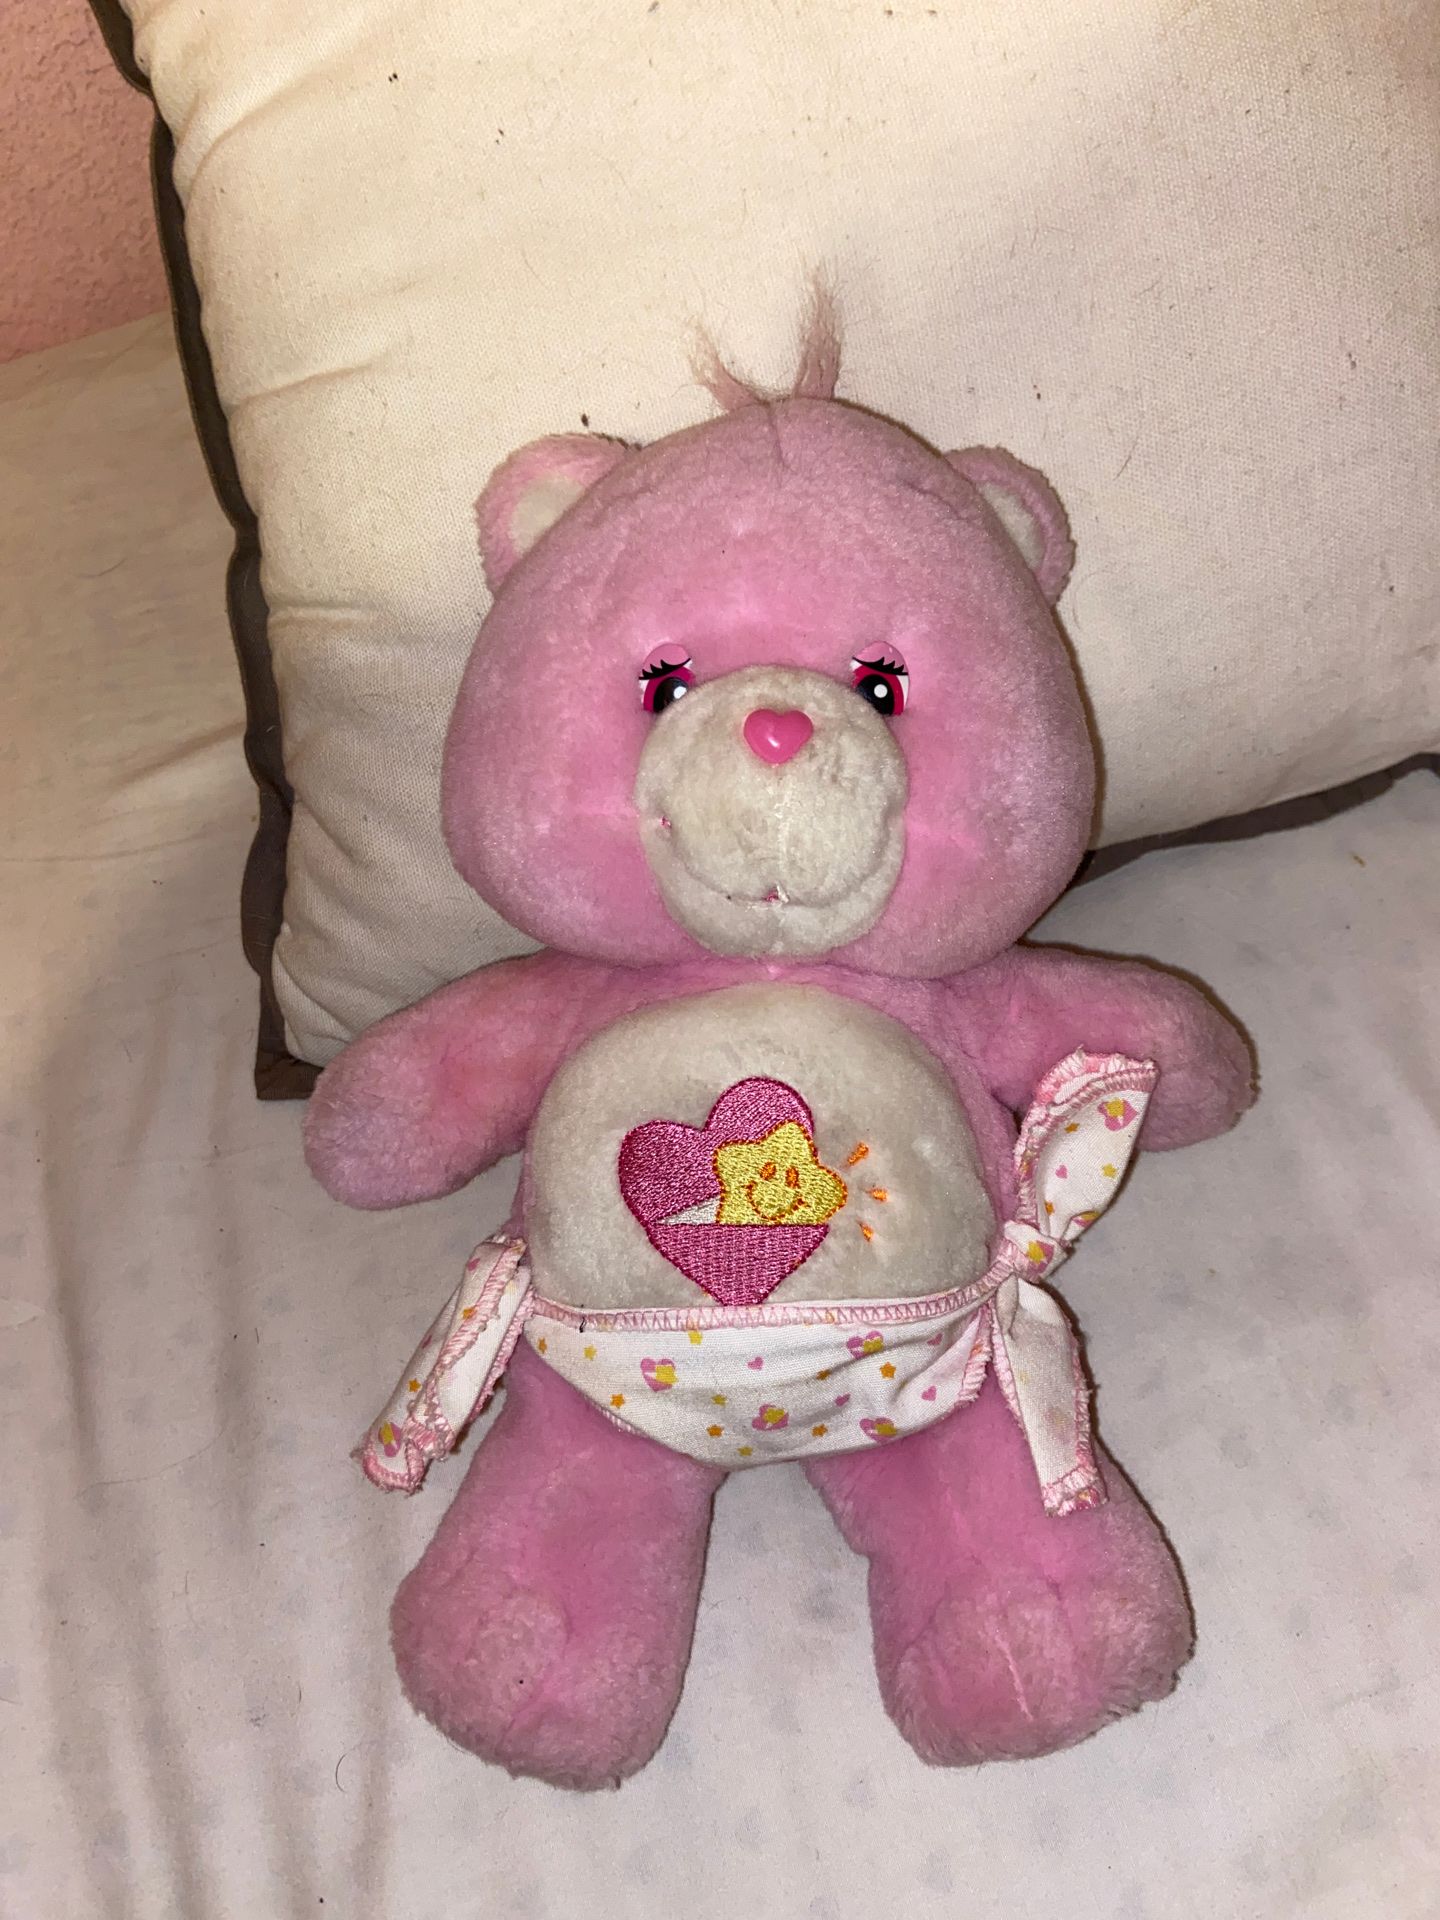 Baby Hugs Care Bear 2002 Pink wearing Diaper Nappy 10" TCFC Plush Stuffed Toy